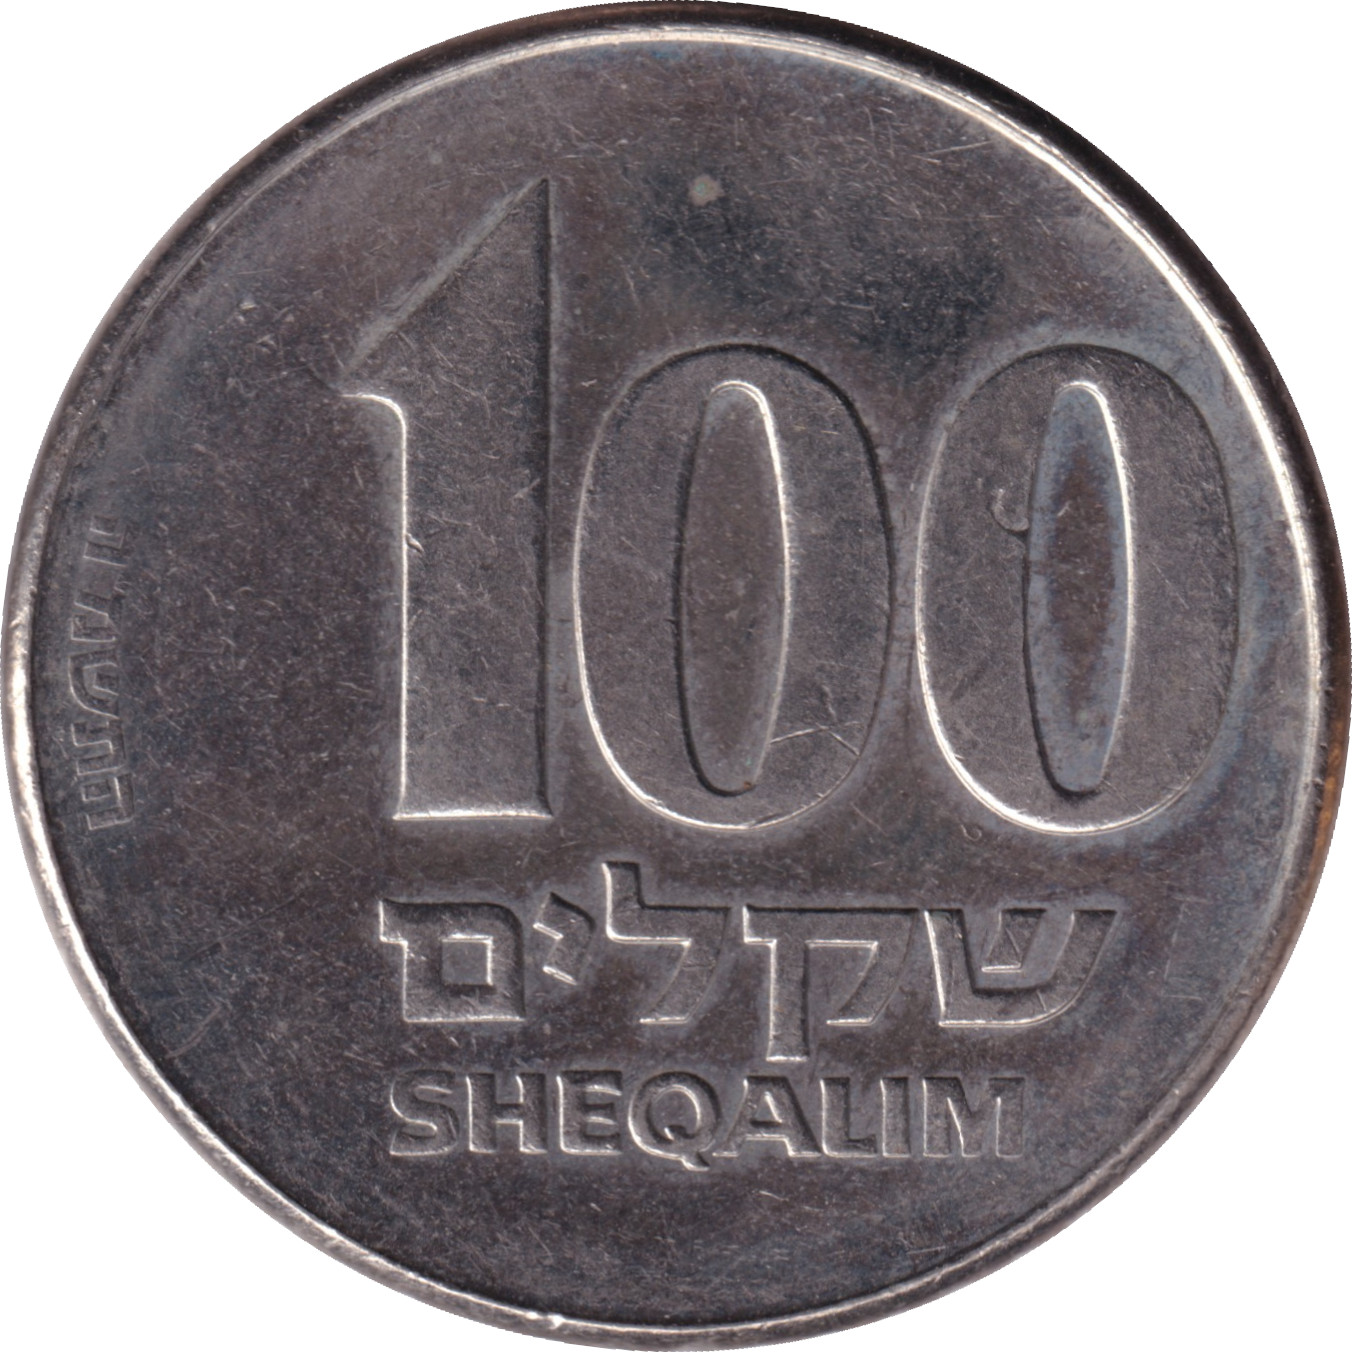 100 sheqalim - Terre d'Israel